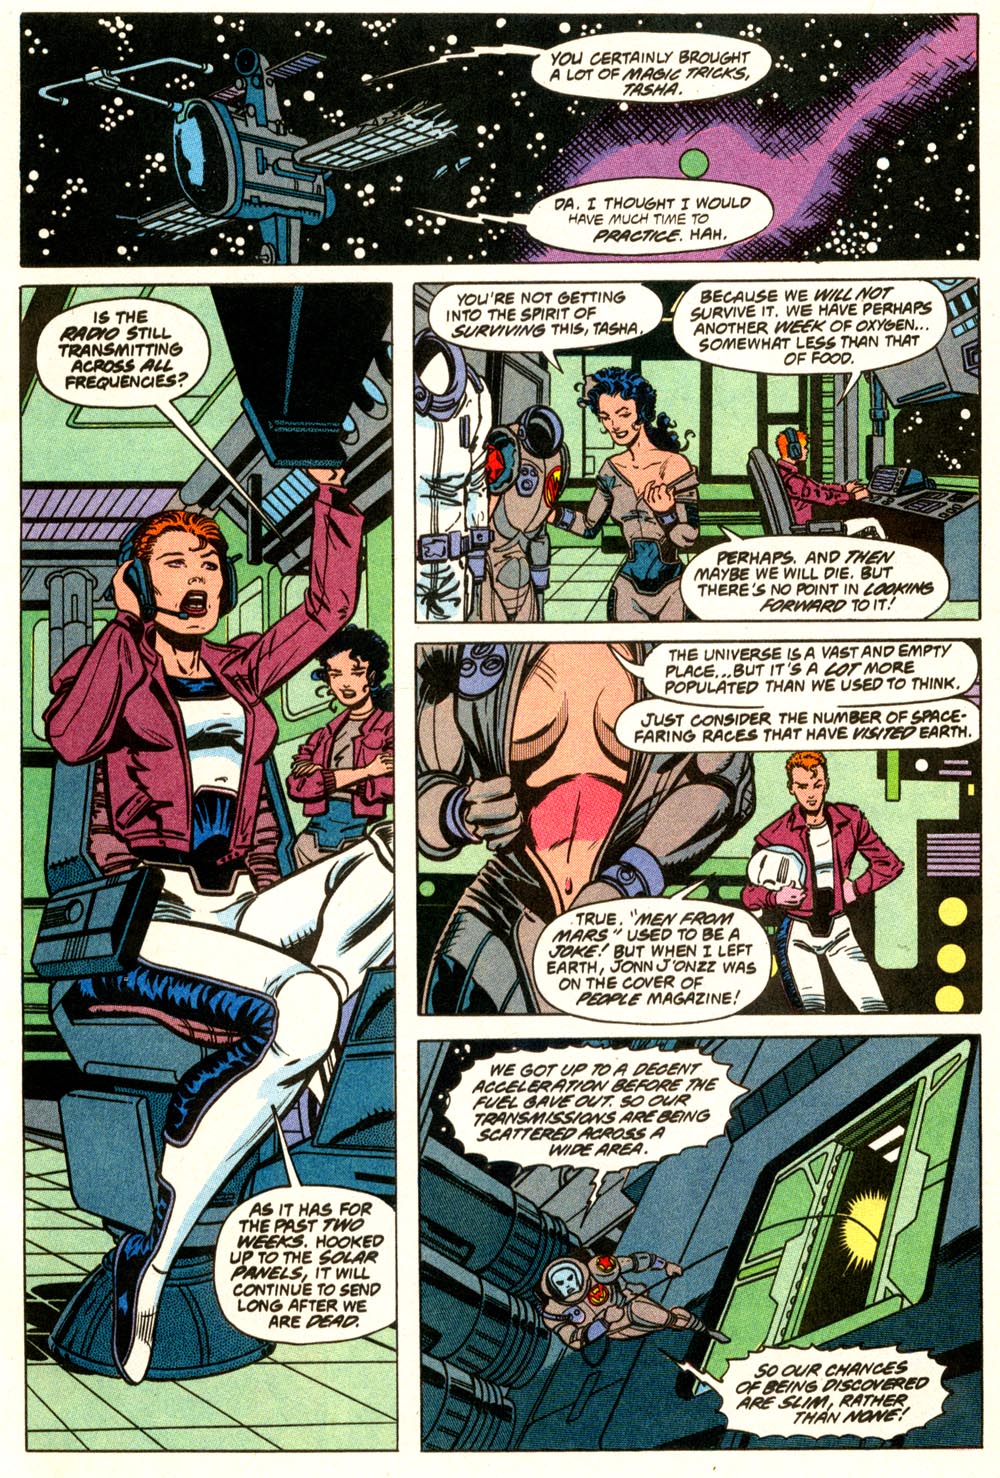 Wonder Woman (1987) 67 Page 3